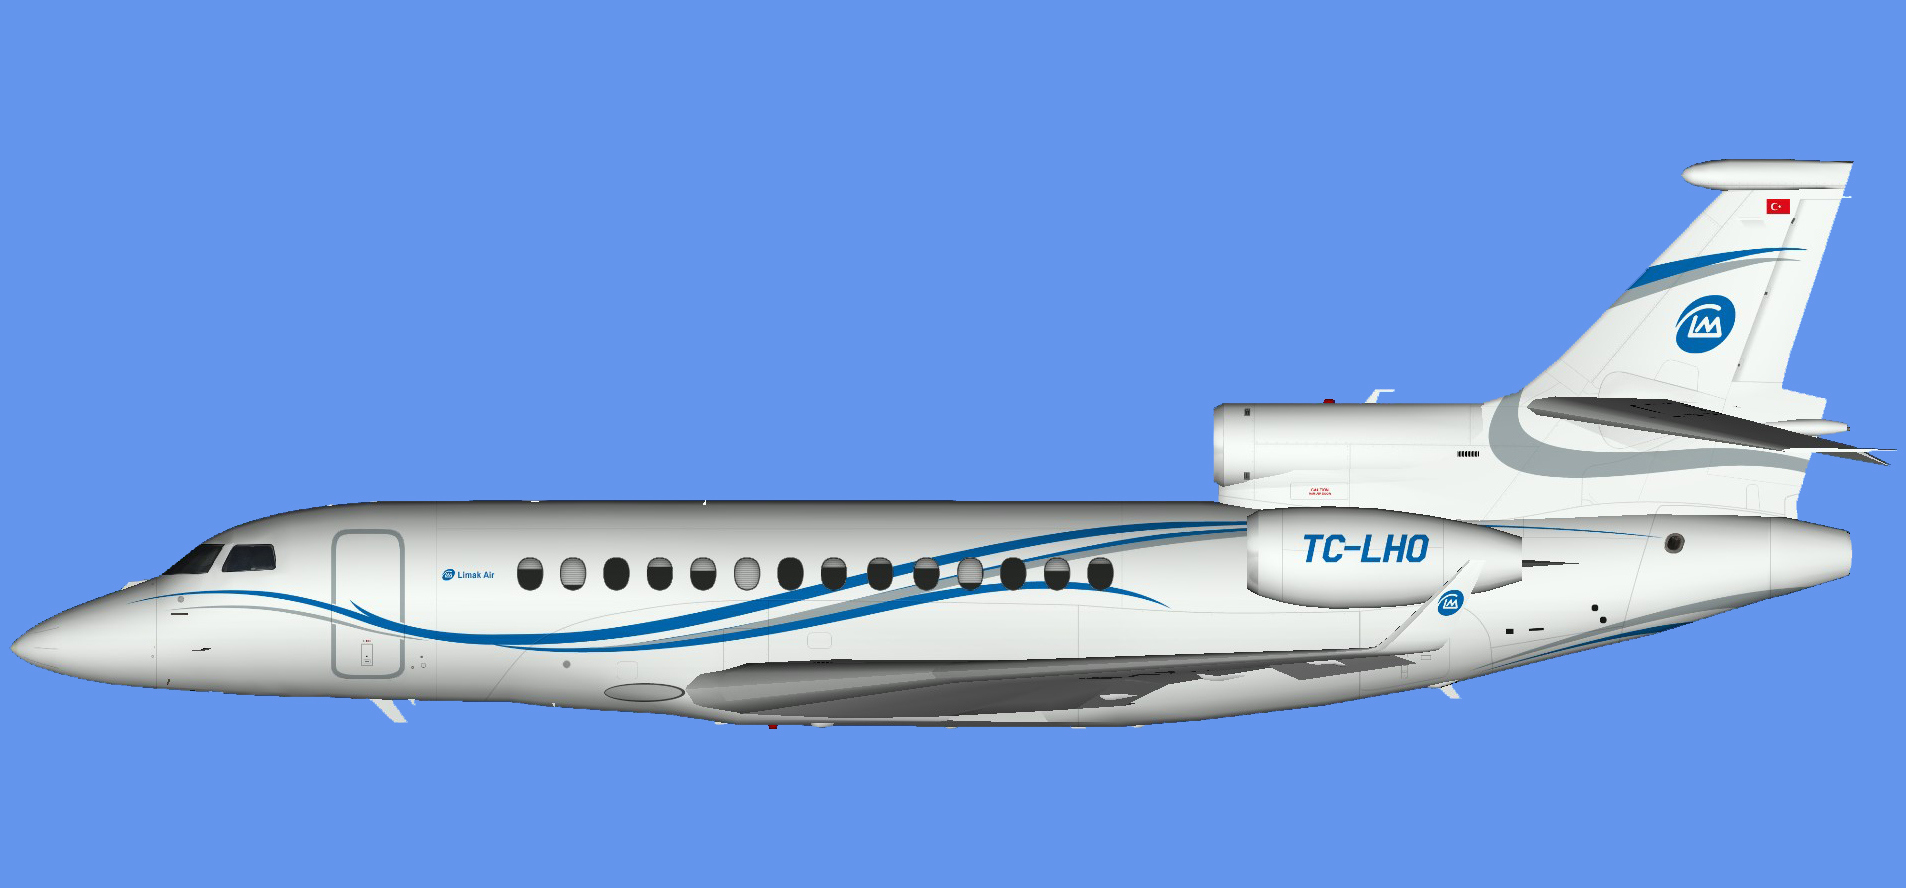 Dassault Falcon 7x TC-LHO